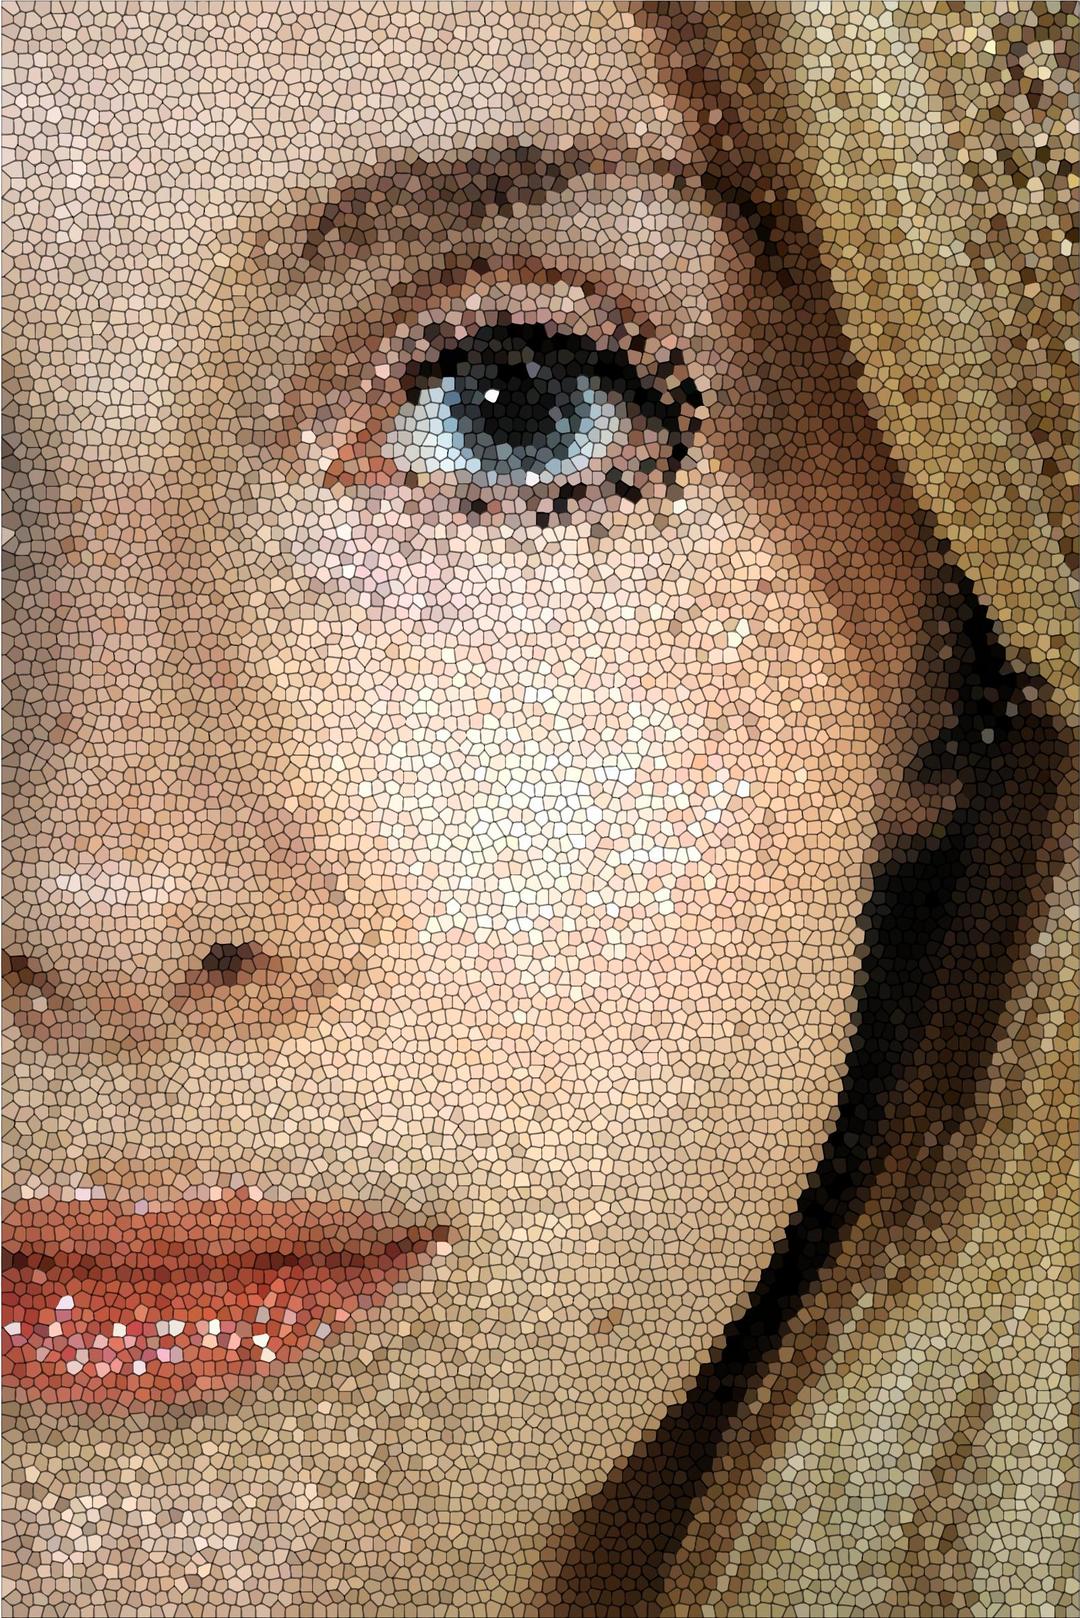 Female Face Mosaic png transparent